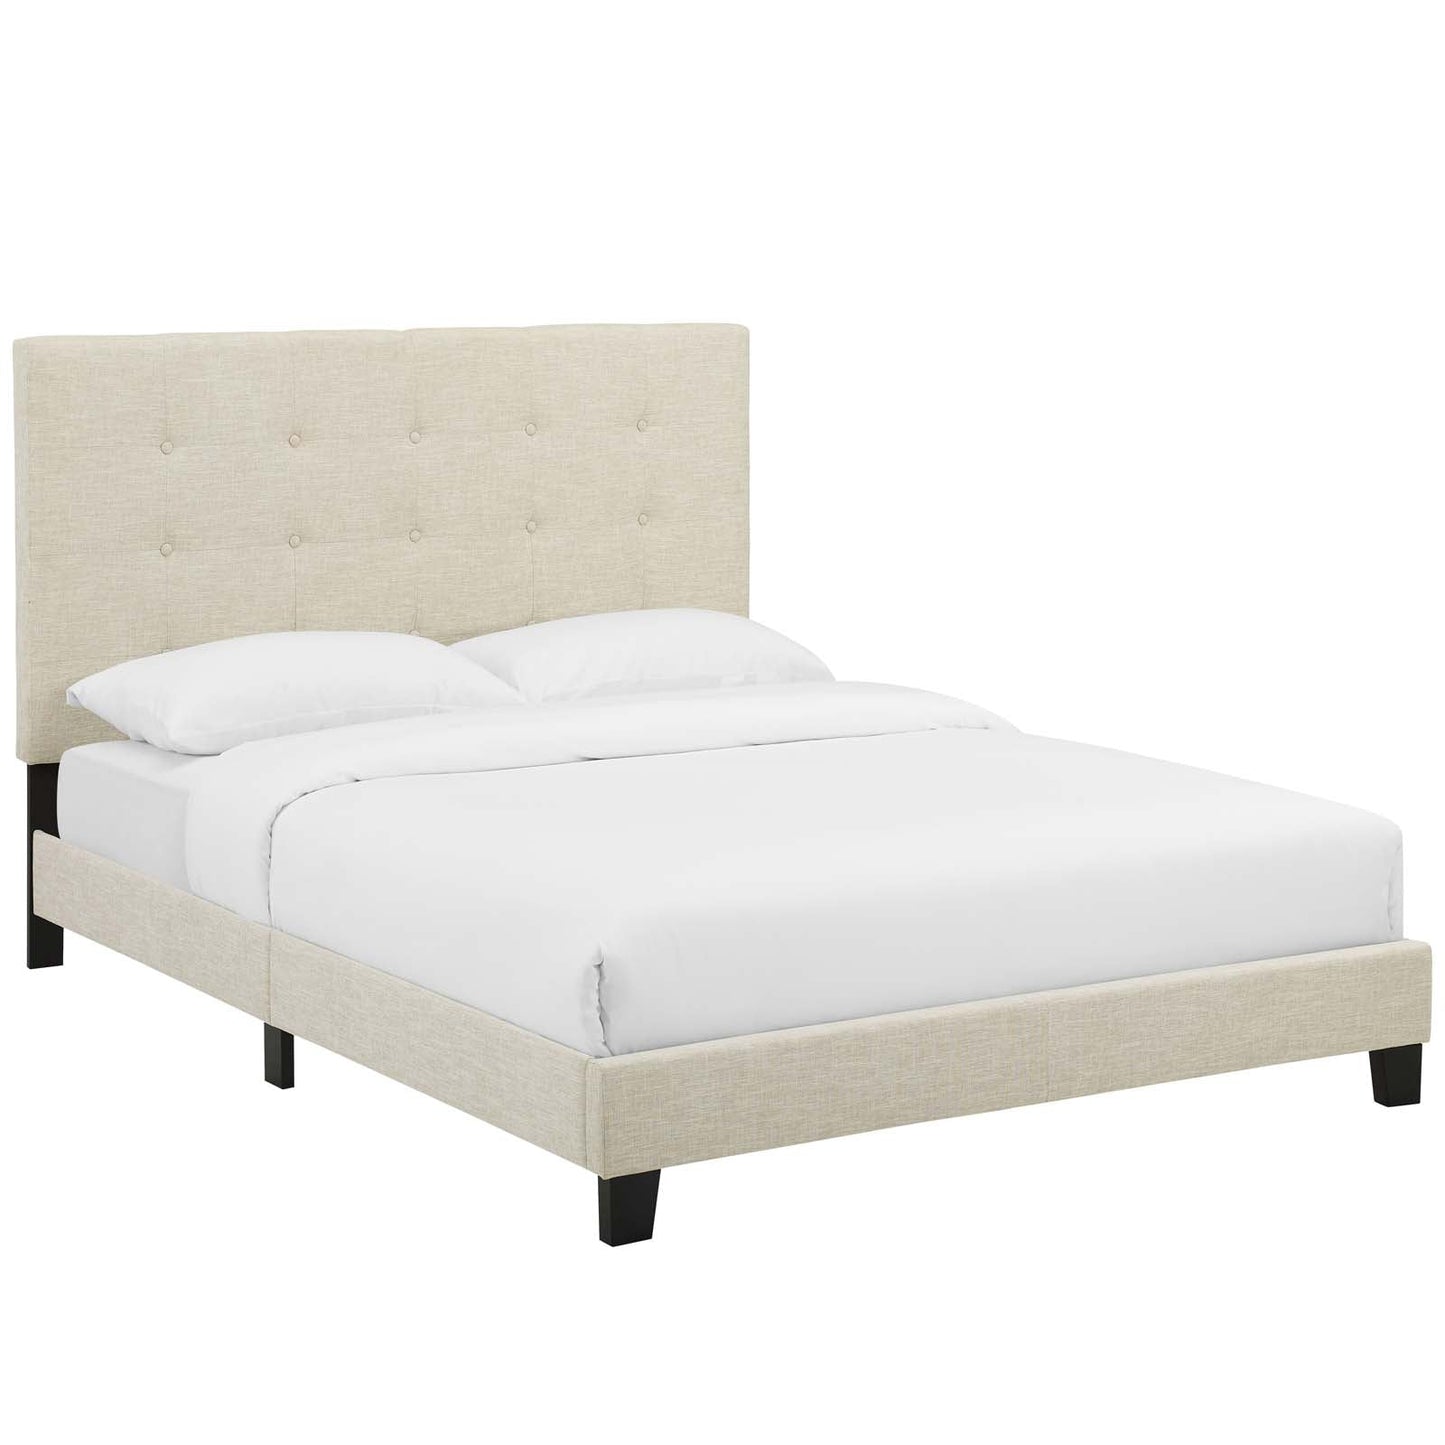 Modway Beds & Bed Frames King / Beige Melanie Tufted Button Upholstered Fabric Platform Bed MOD-5994-BEI